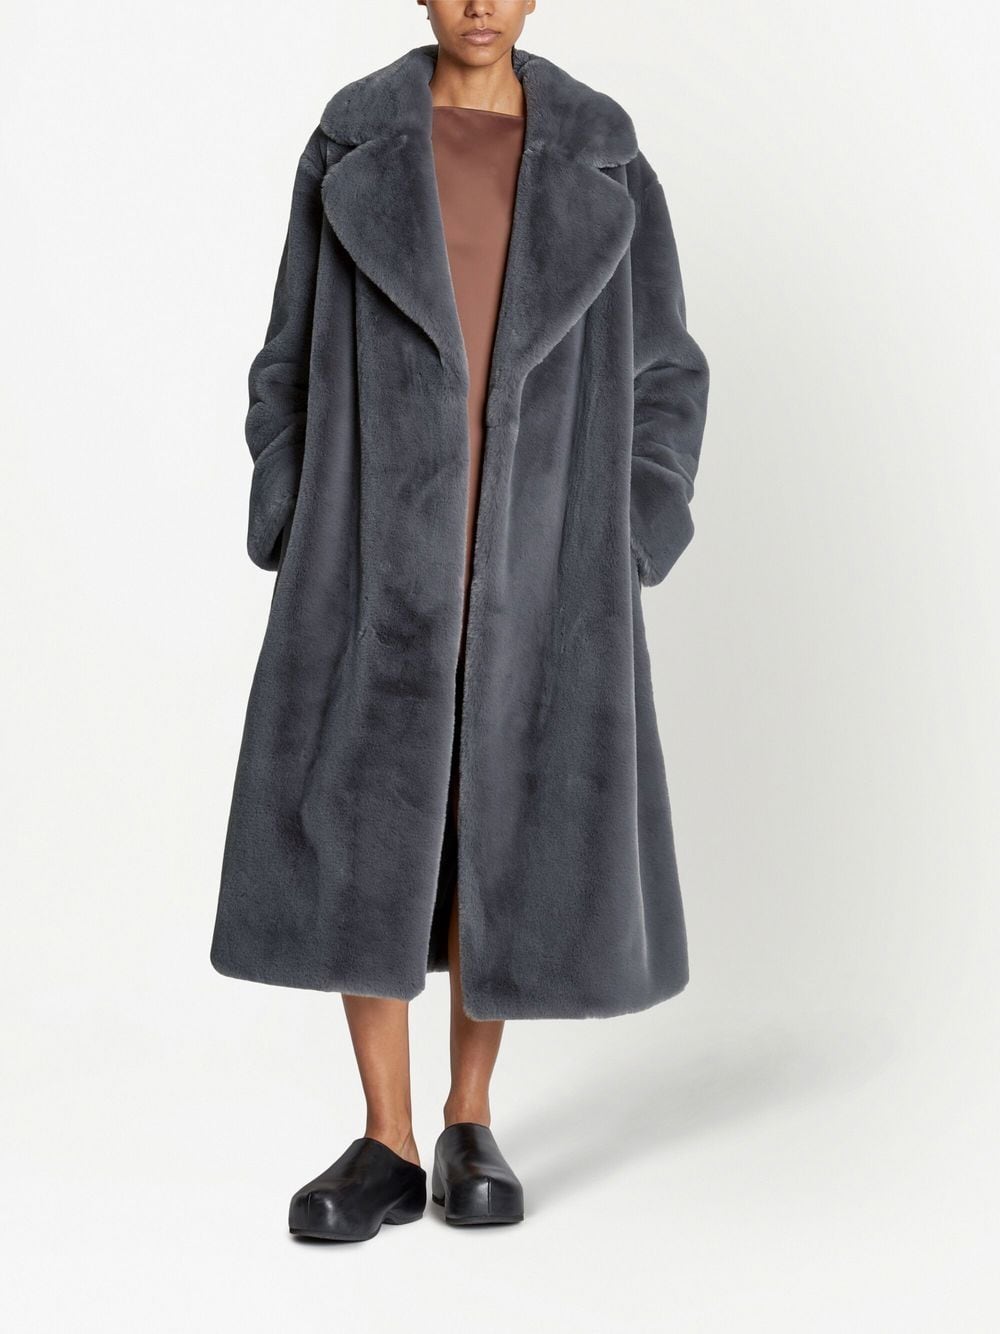 Proenza Schouler White Label faux-fur belted coat - Grijs